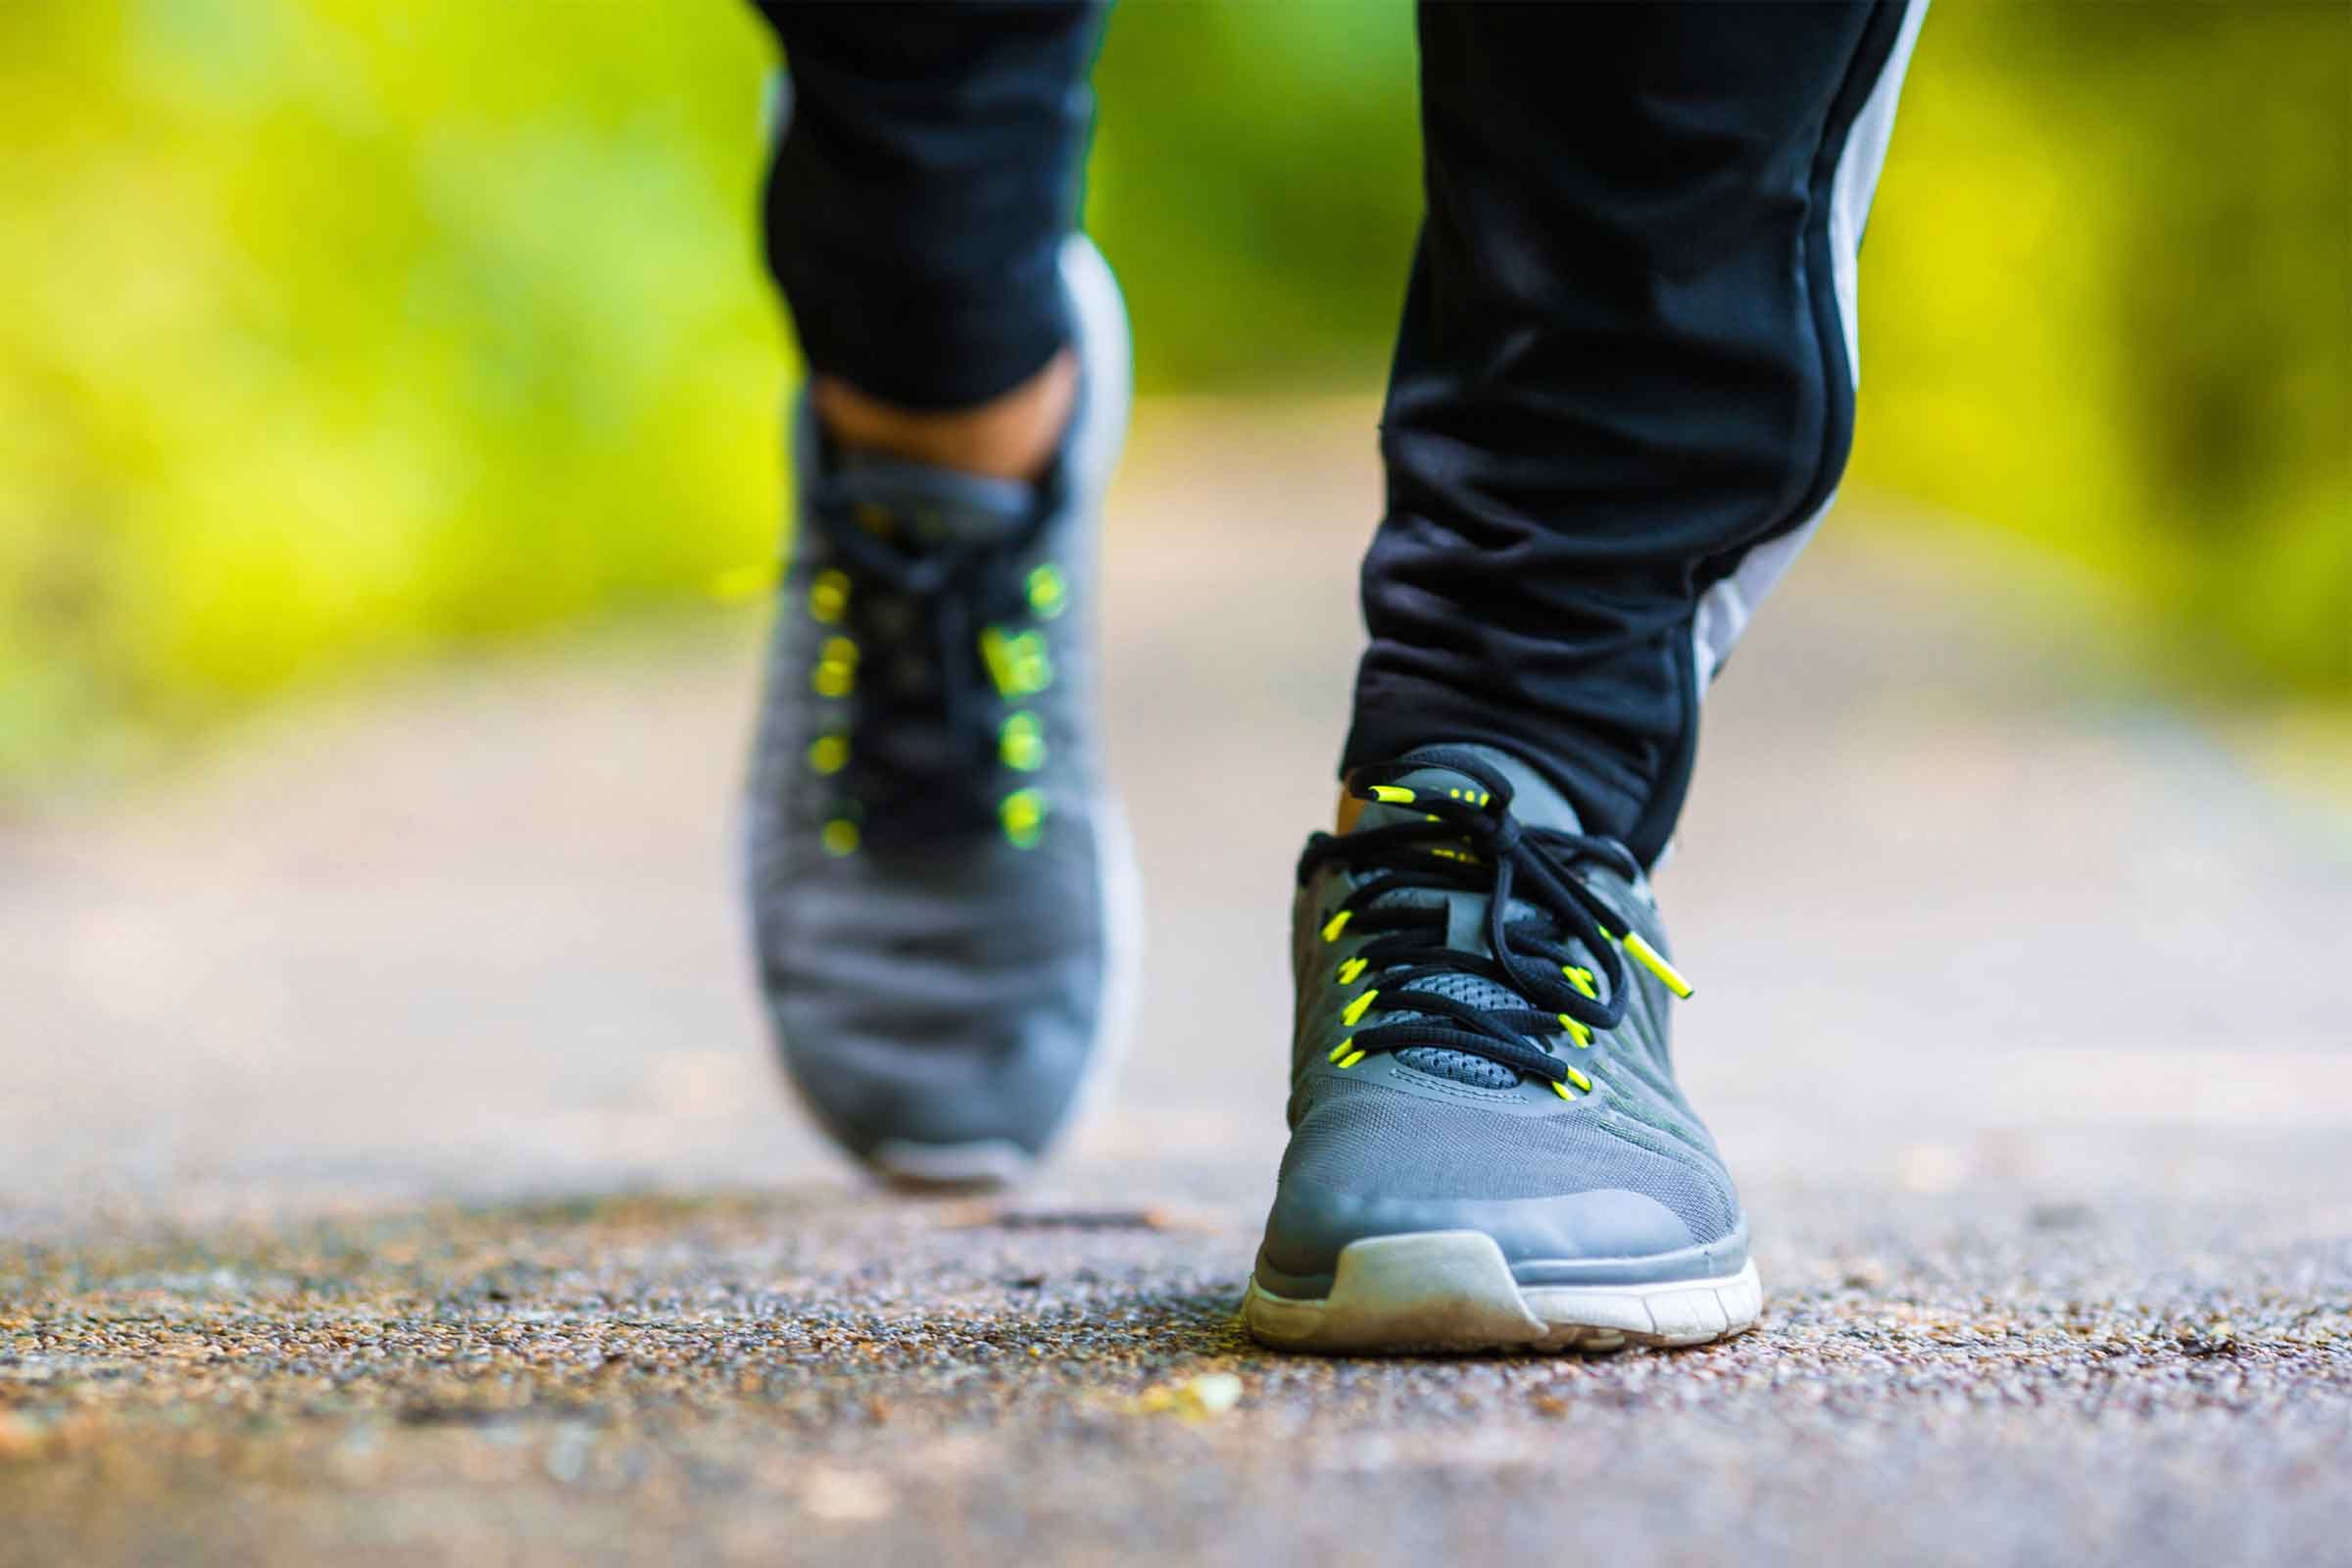 The 3 Best Flip-Flops for Walking, according to Podiatrists (Men's